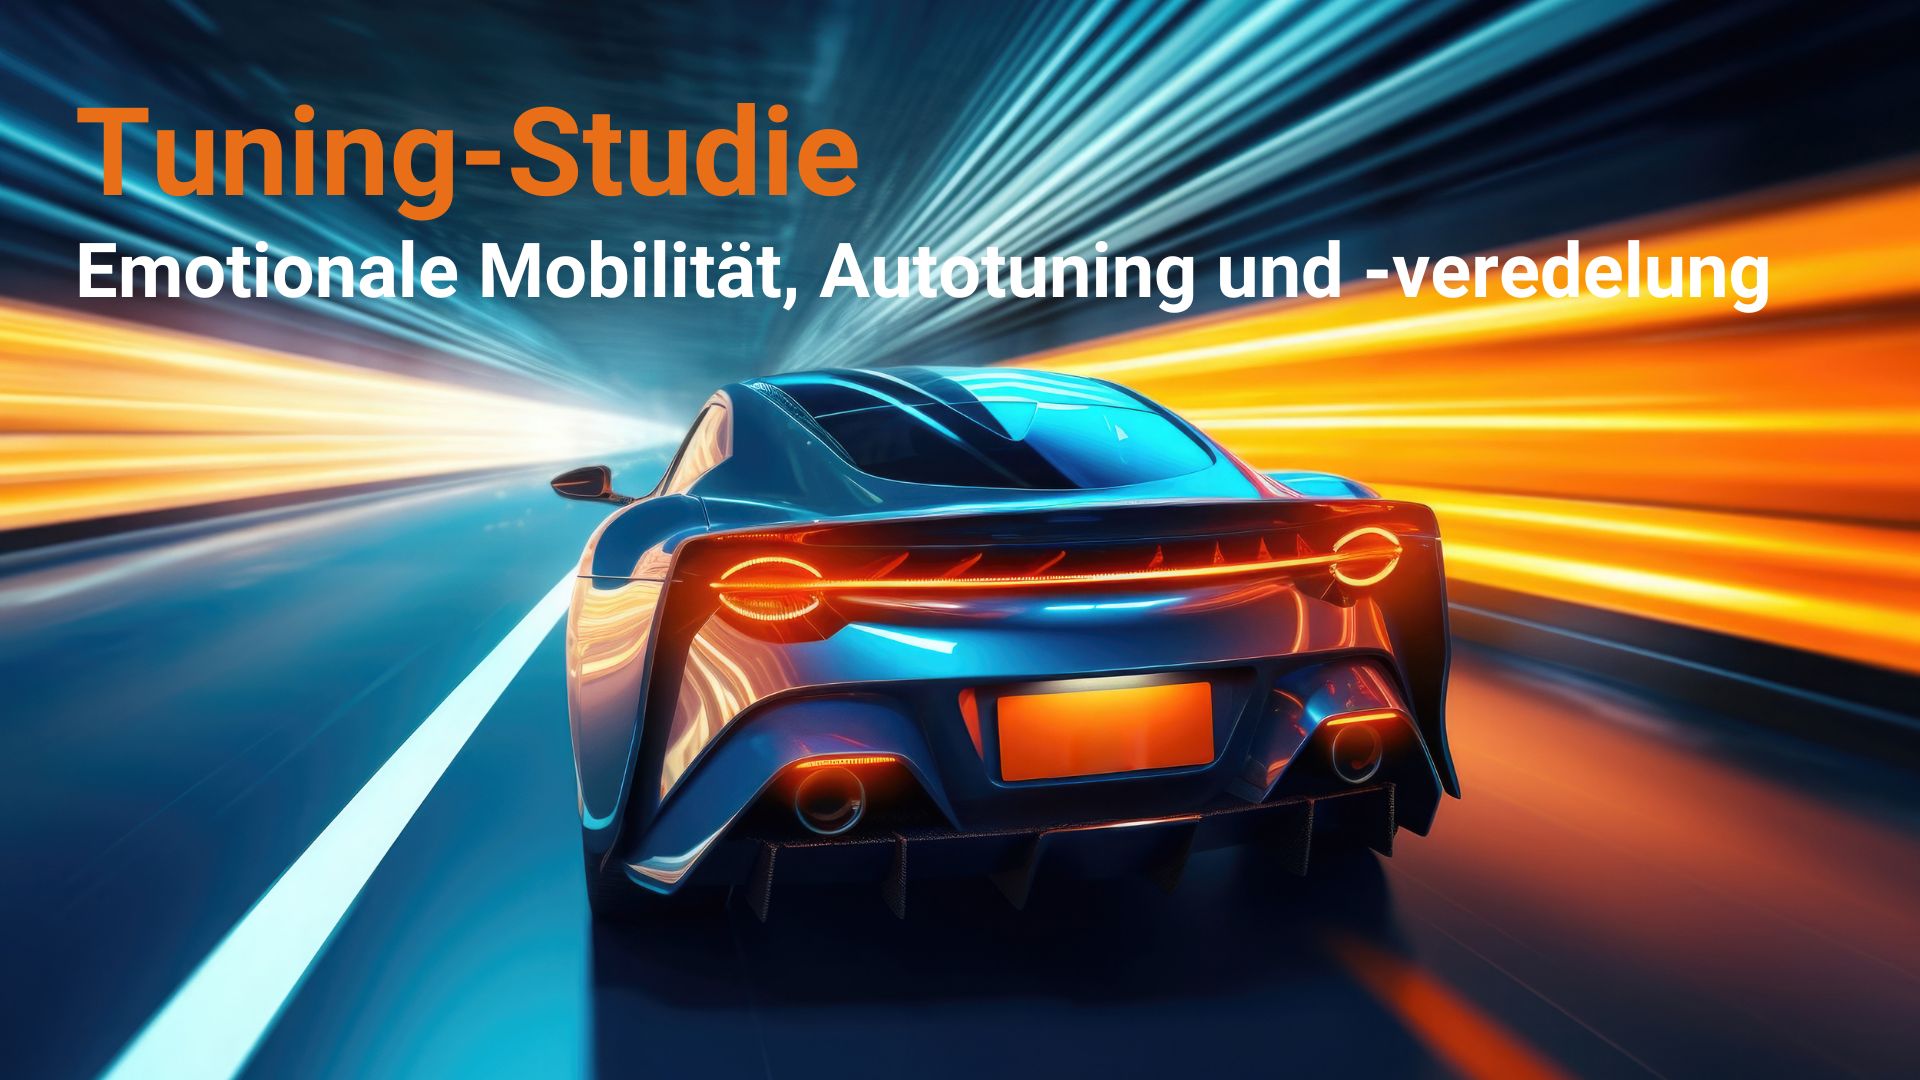 BBE Automotive GmbH